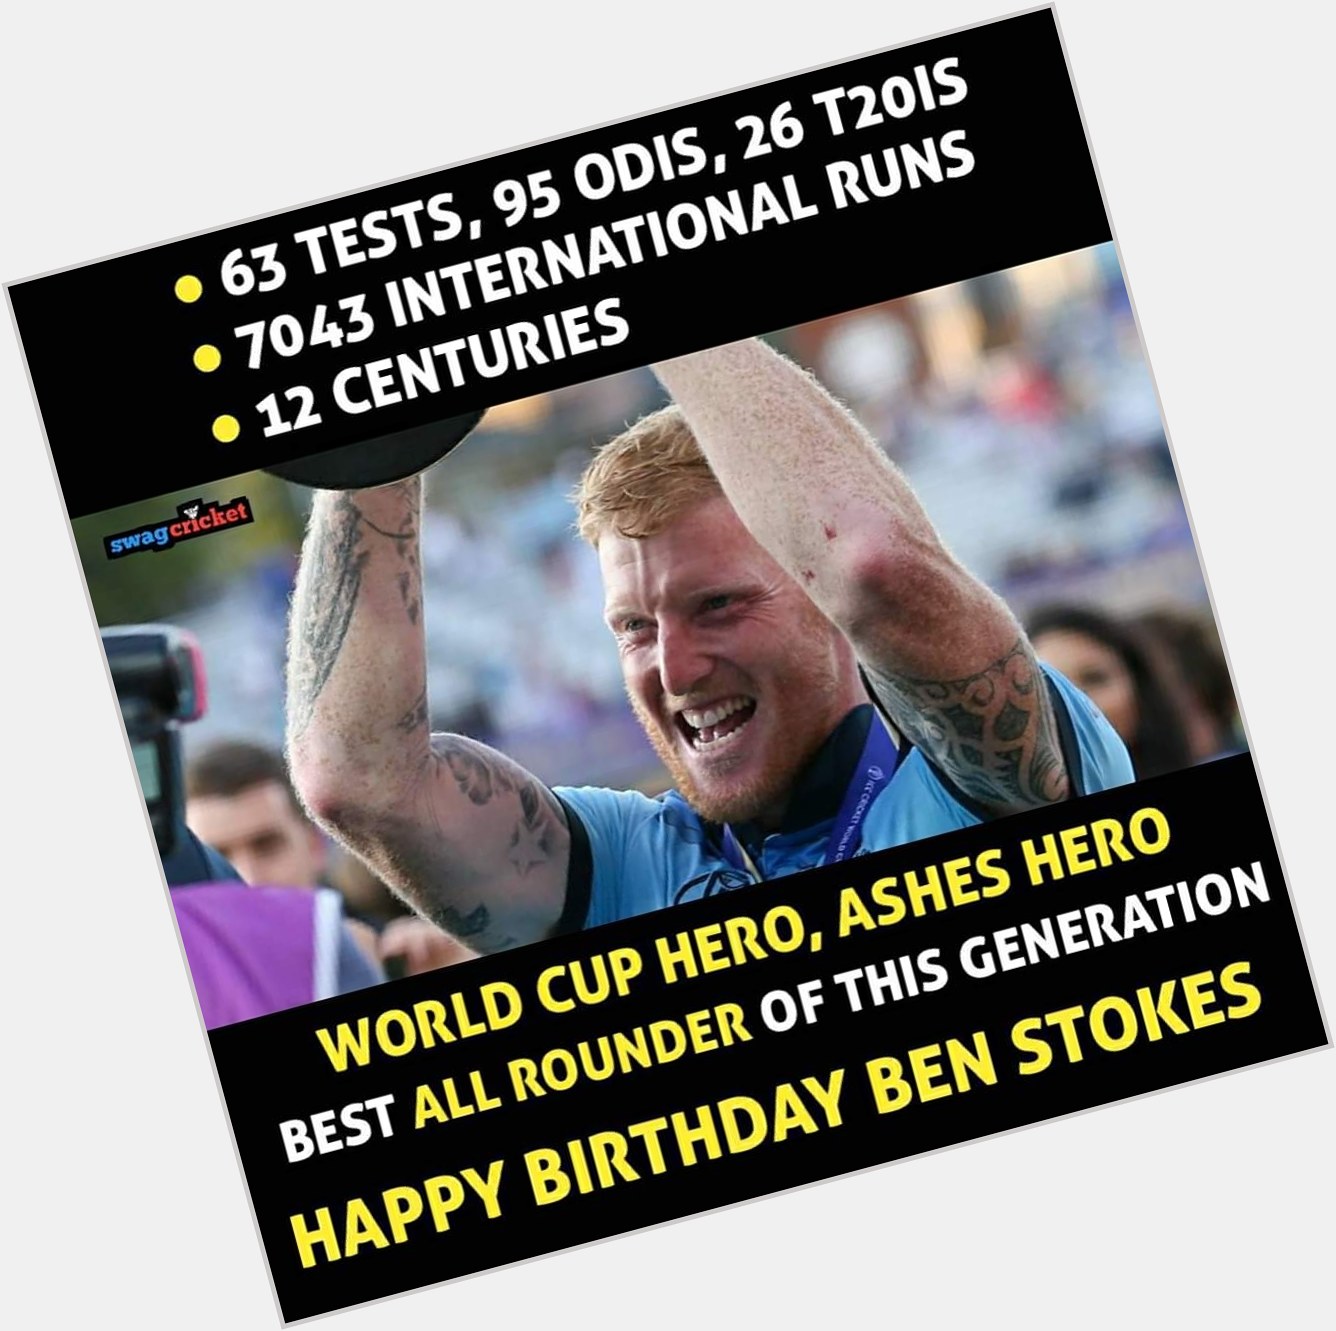 Happy Birthday Sir Ben Stokes! 